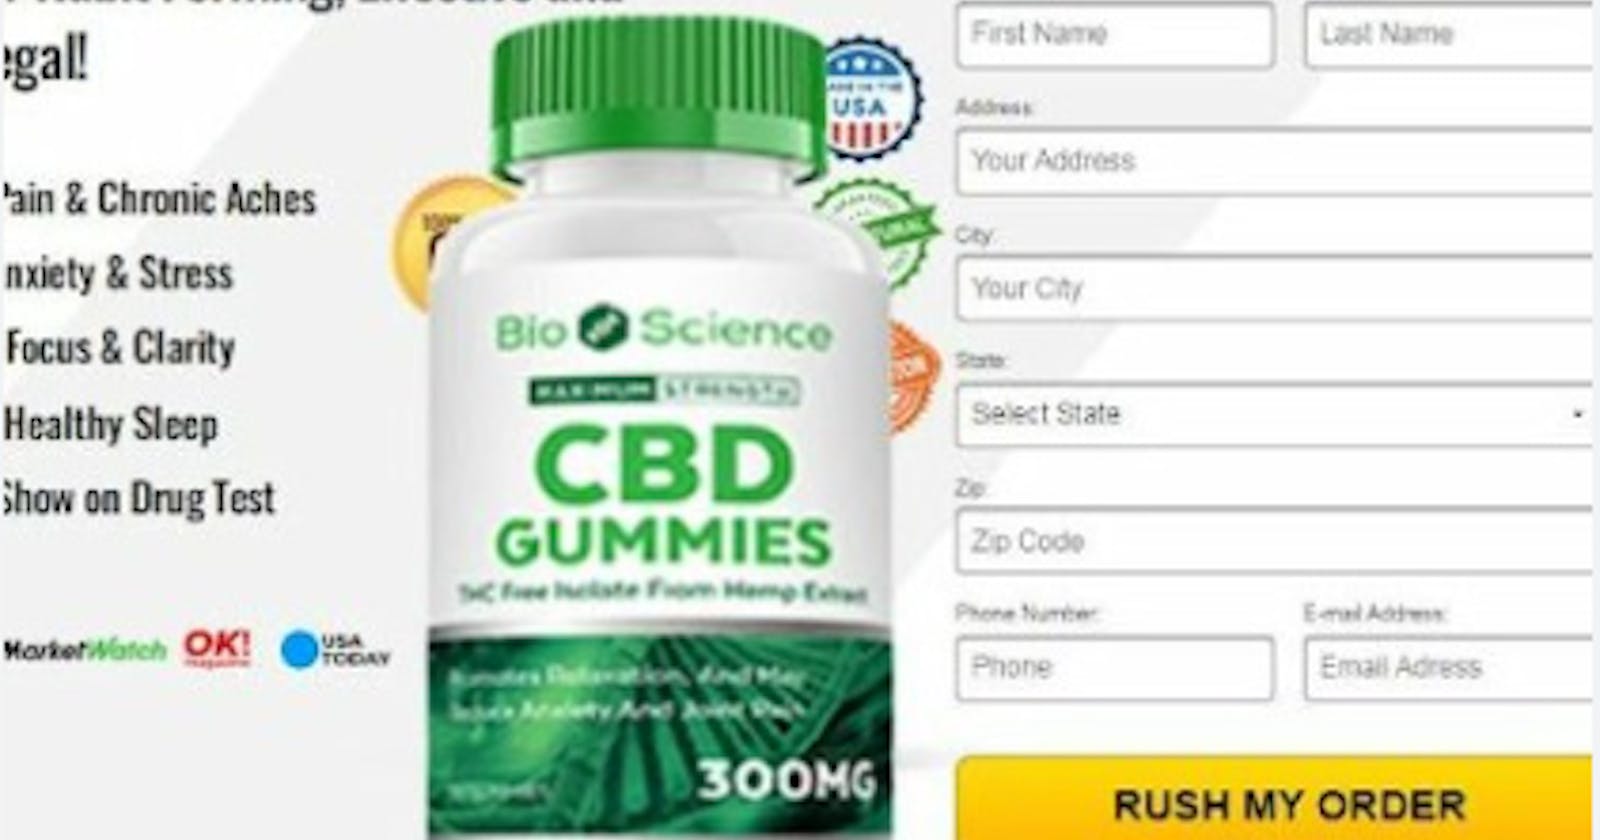 BioScience CBD Gummies Official-2023 USA *CBD Pain Relief *Diet] Really Work Or Hoax!